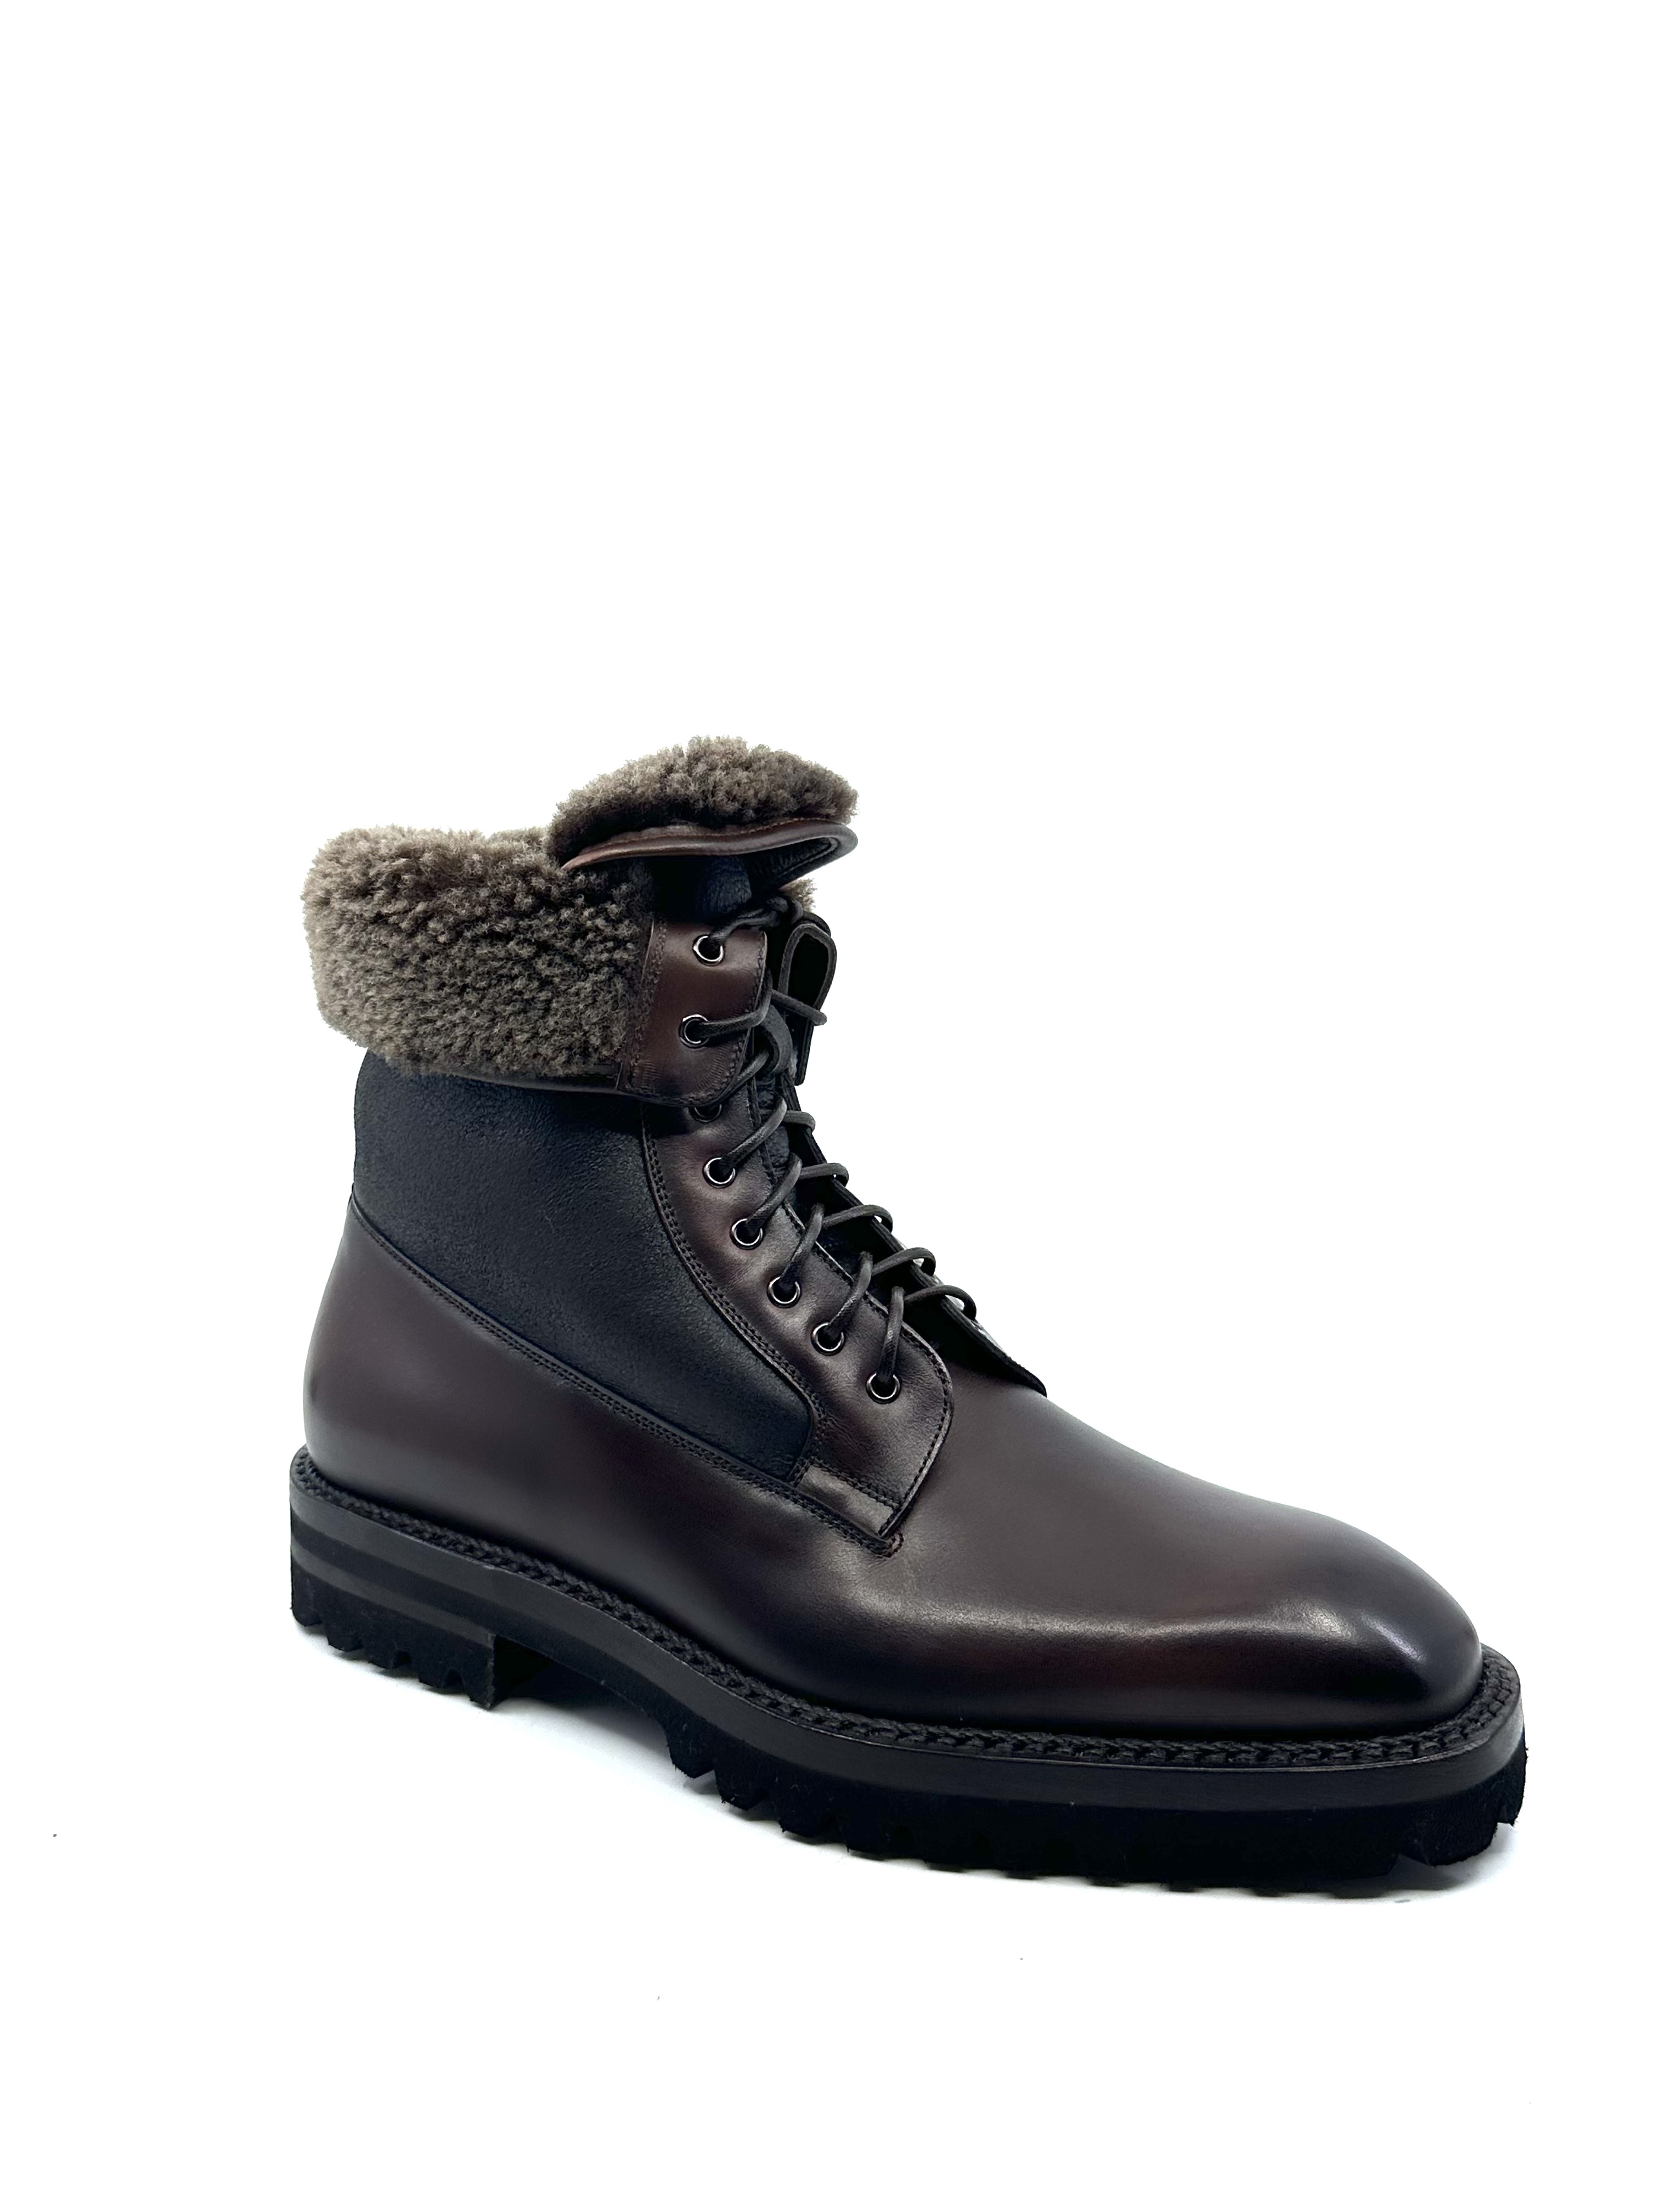 Derby Boots bi-matière cuir brown fourrée Franceschetti